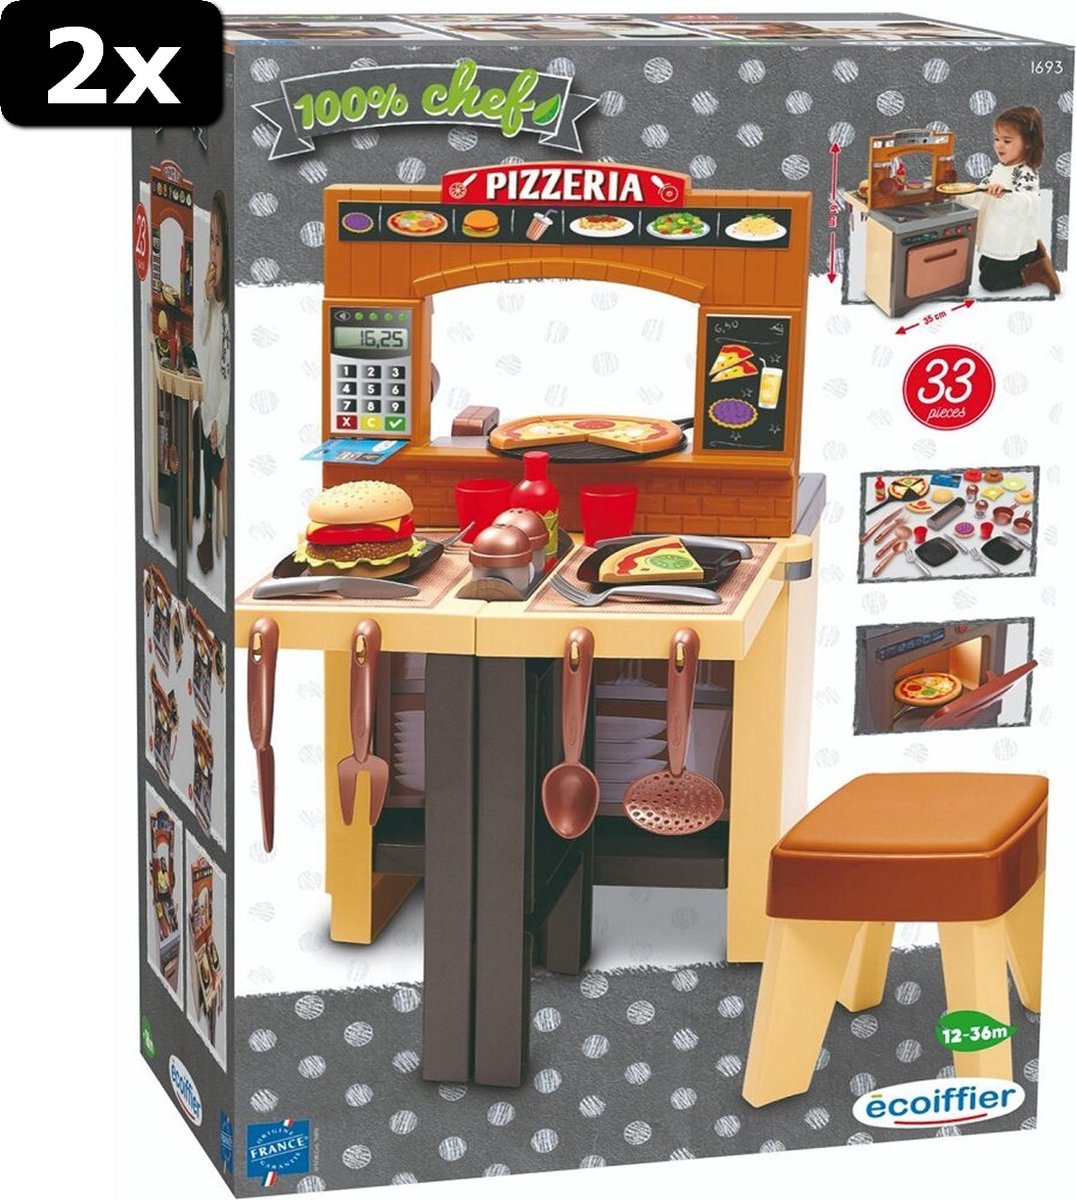 2x Ecoiffier Pizzeria 100% Chef Keuken + Restaurant + Accessoires